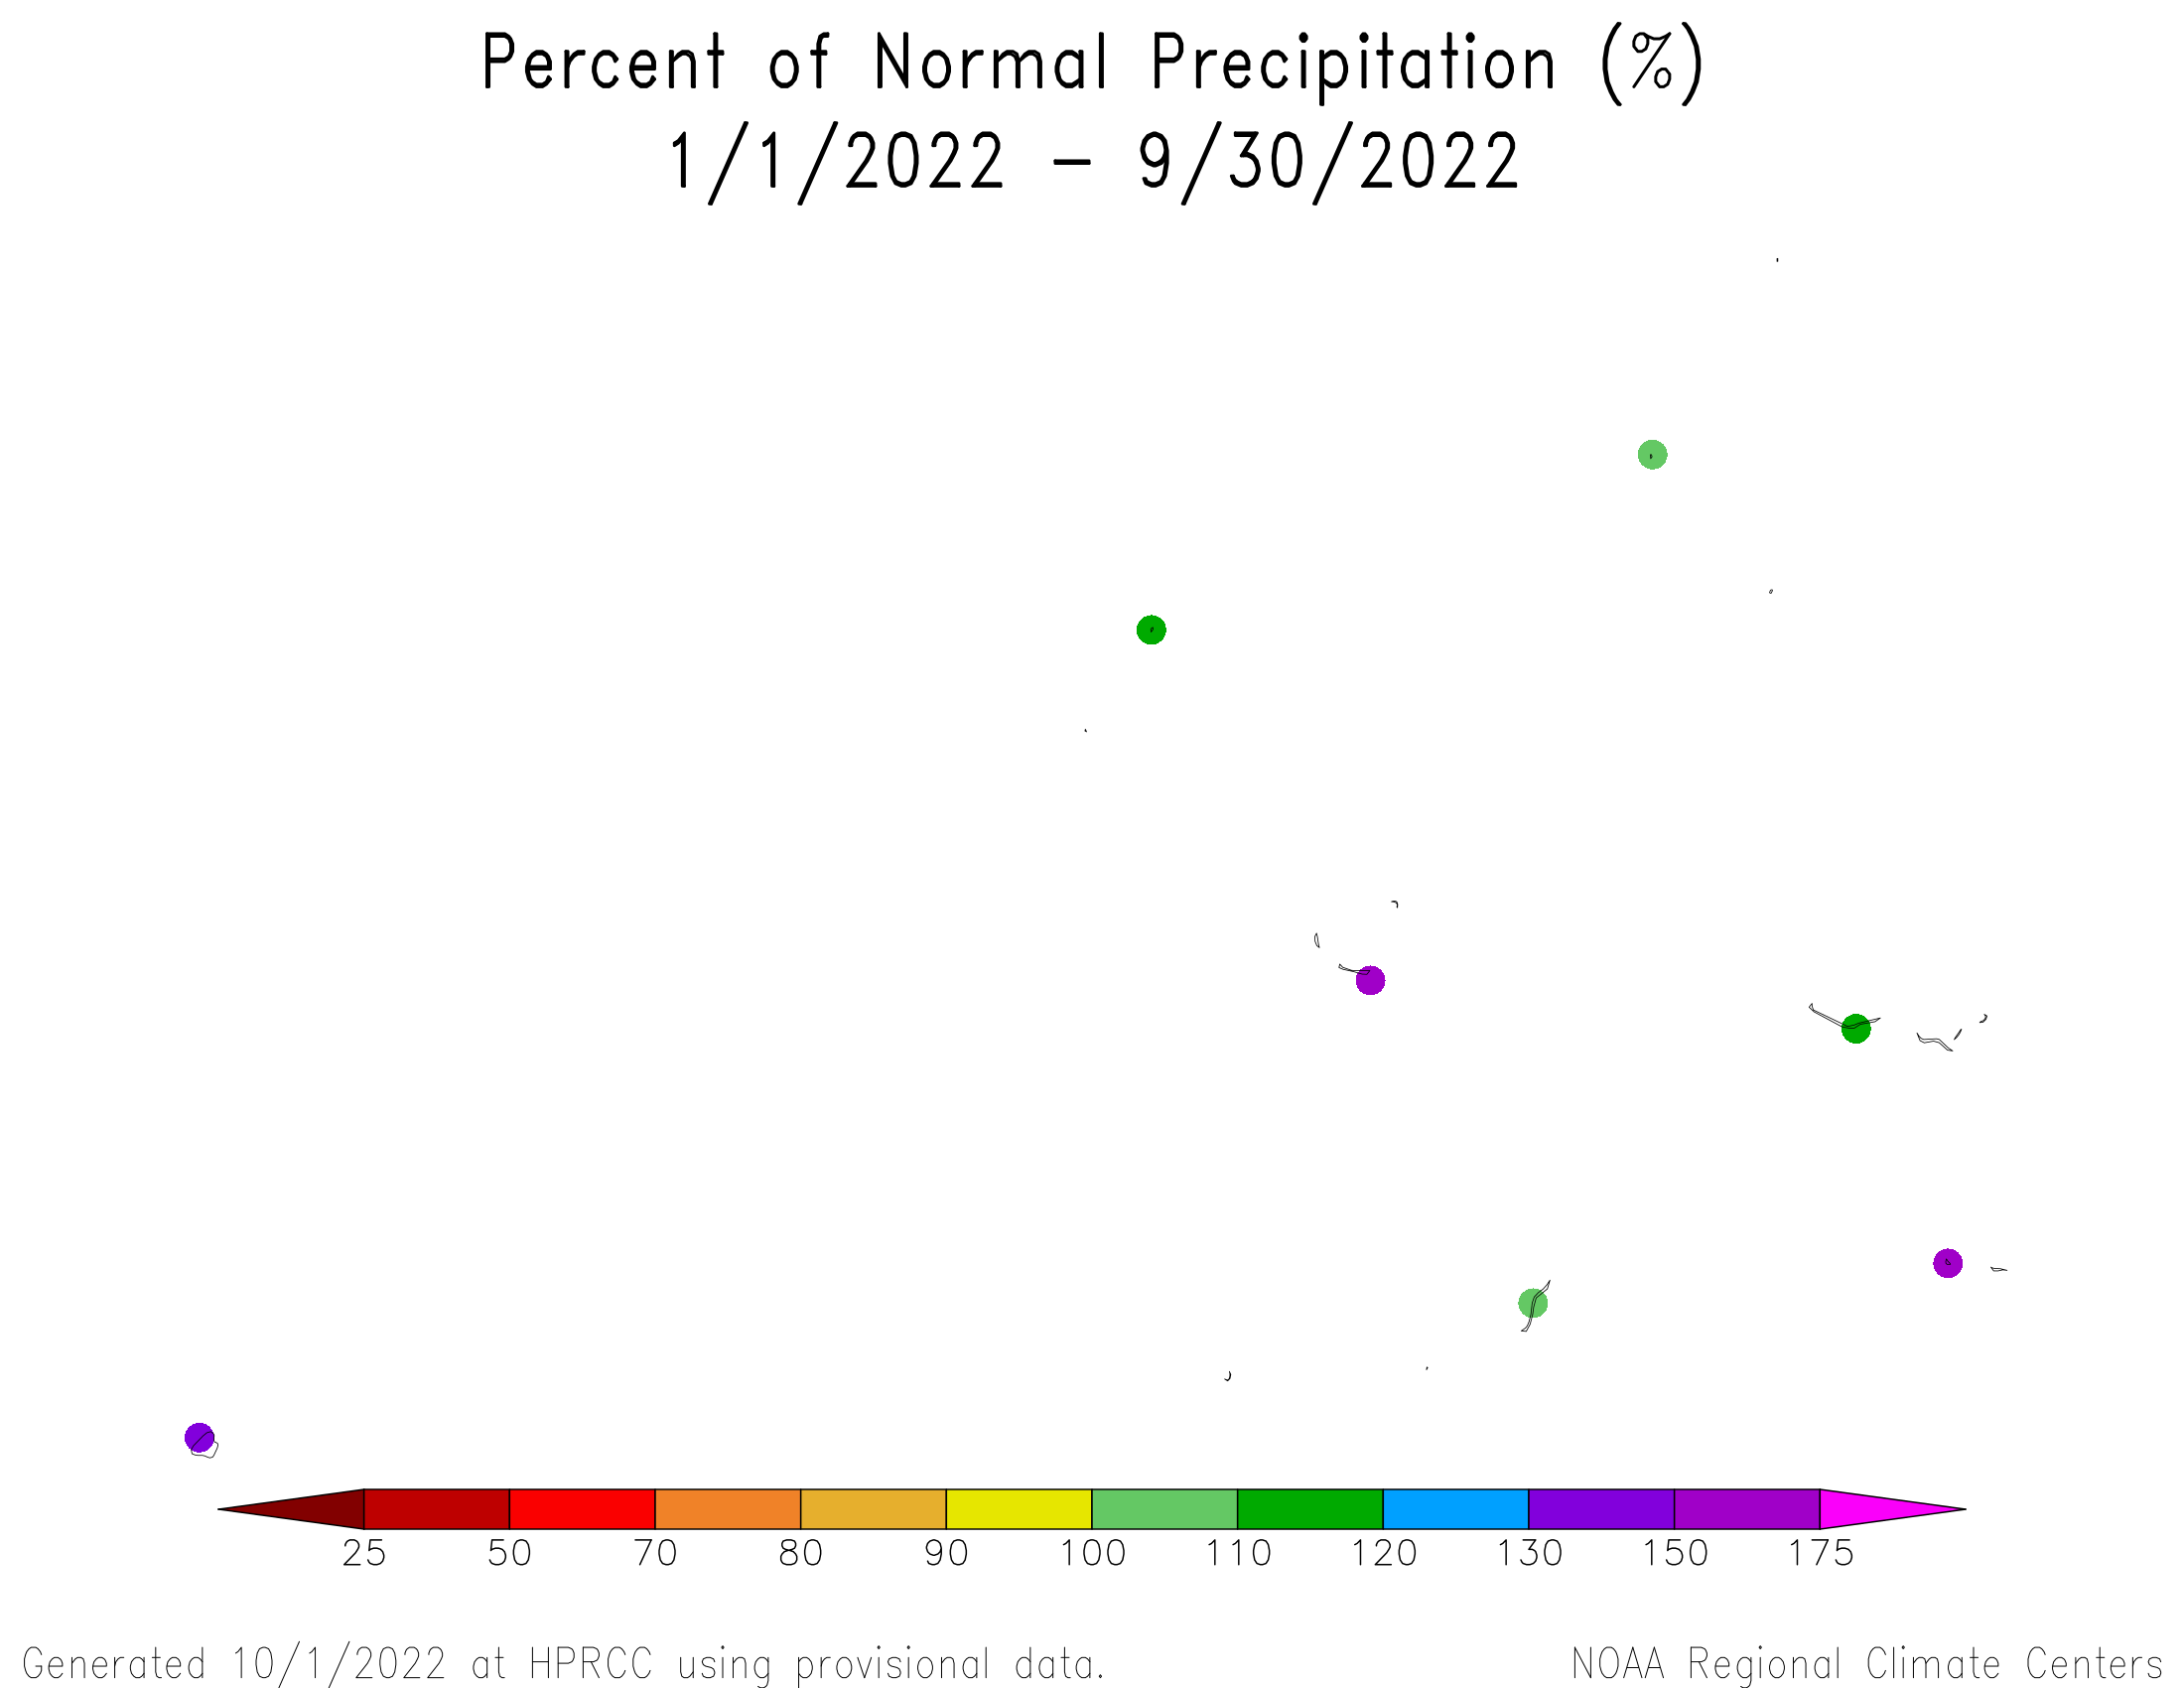 January-September 2022 Percent of Normal Precipitation for the Marshall Islands